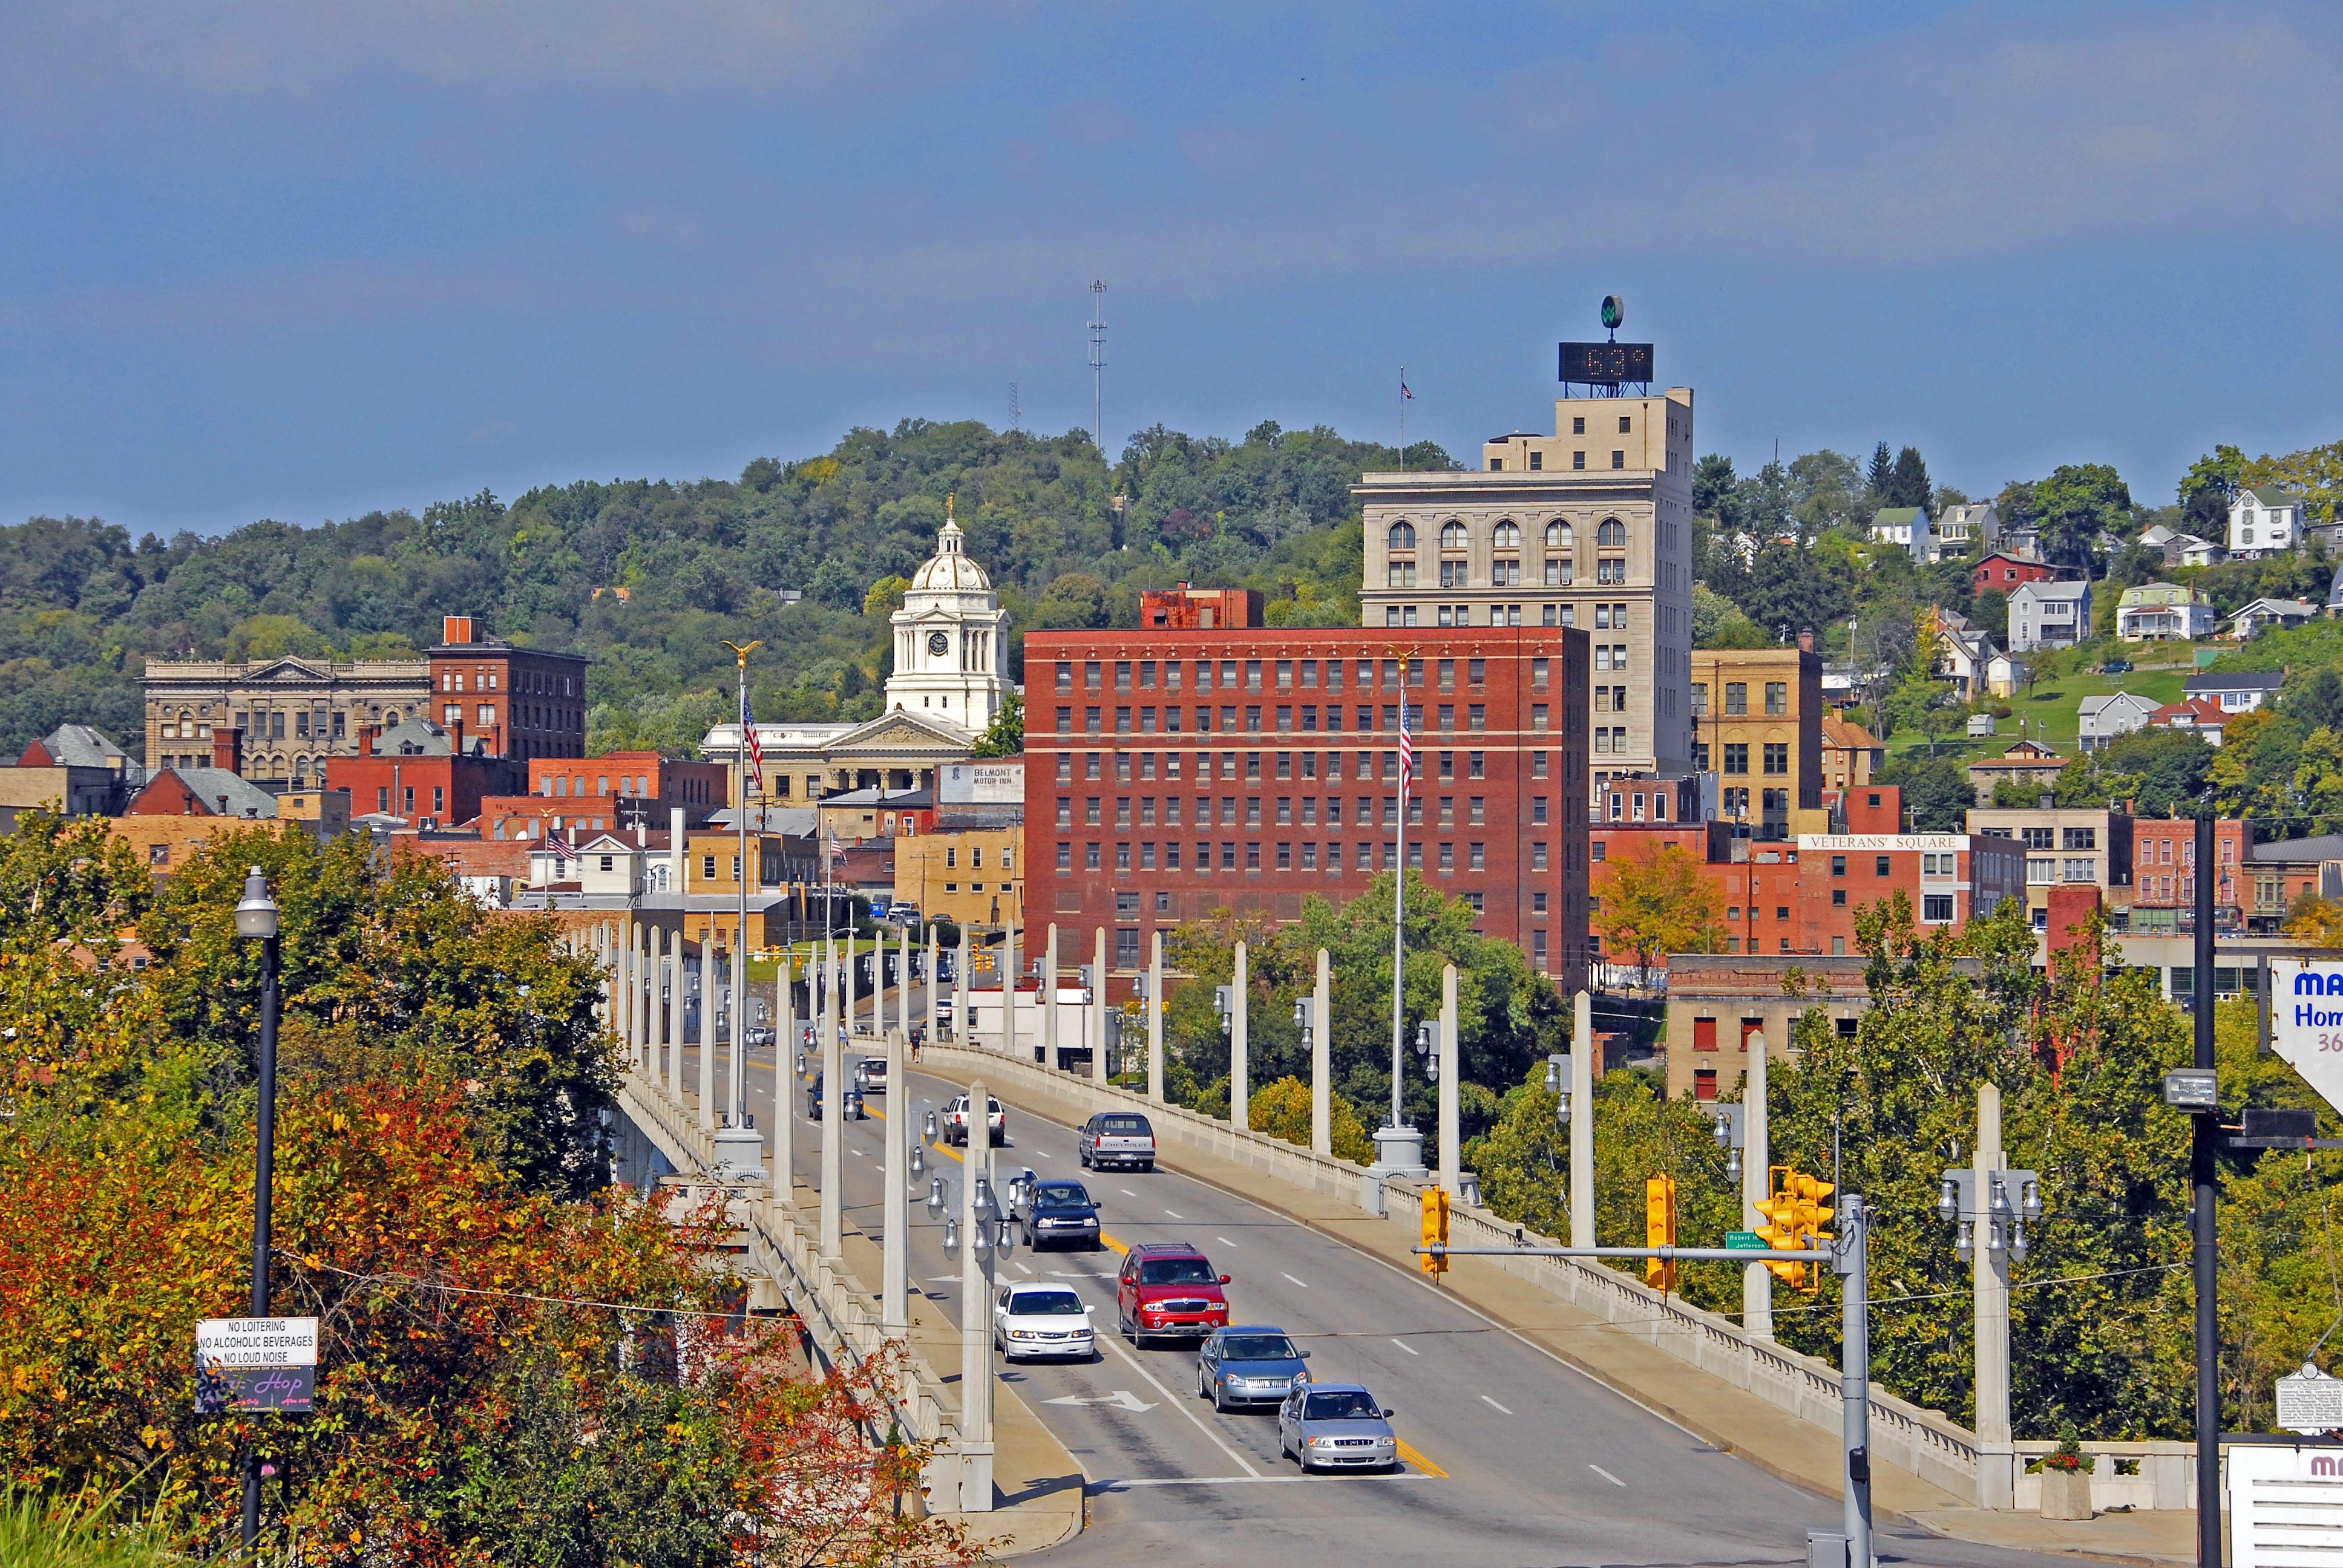 Fairmont, West Virginia | Advisory Council on Historic Preservation